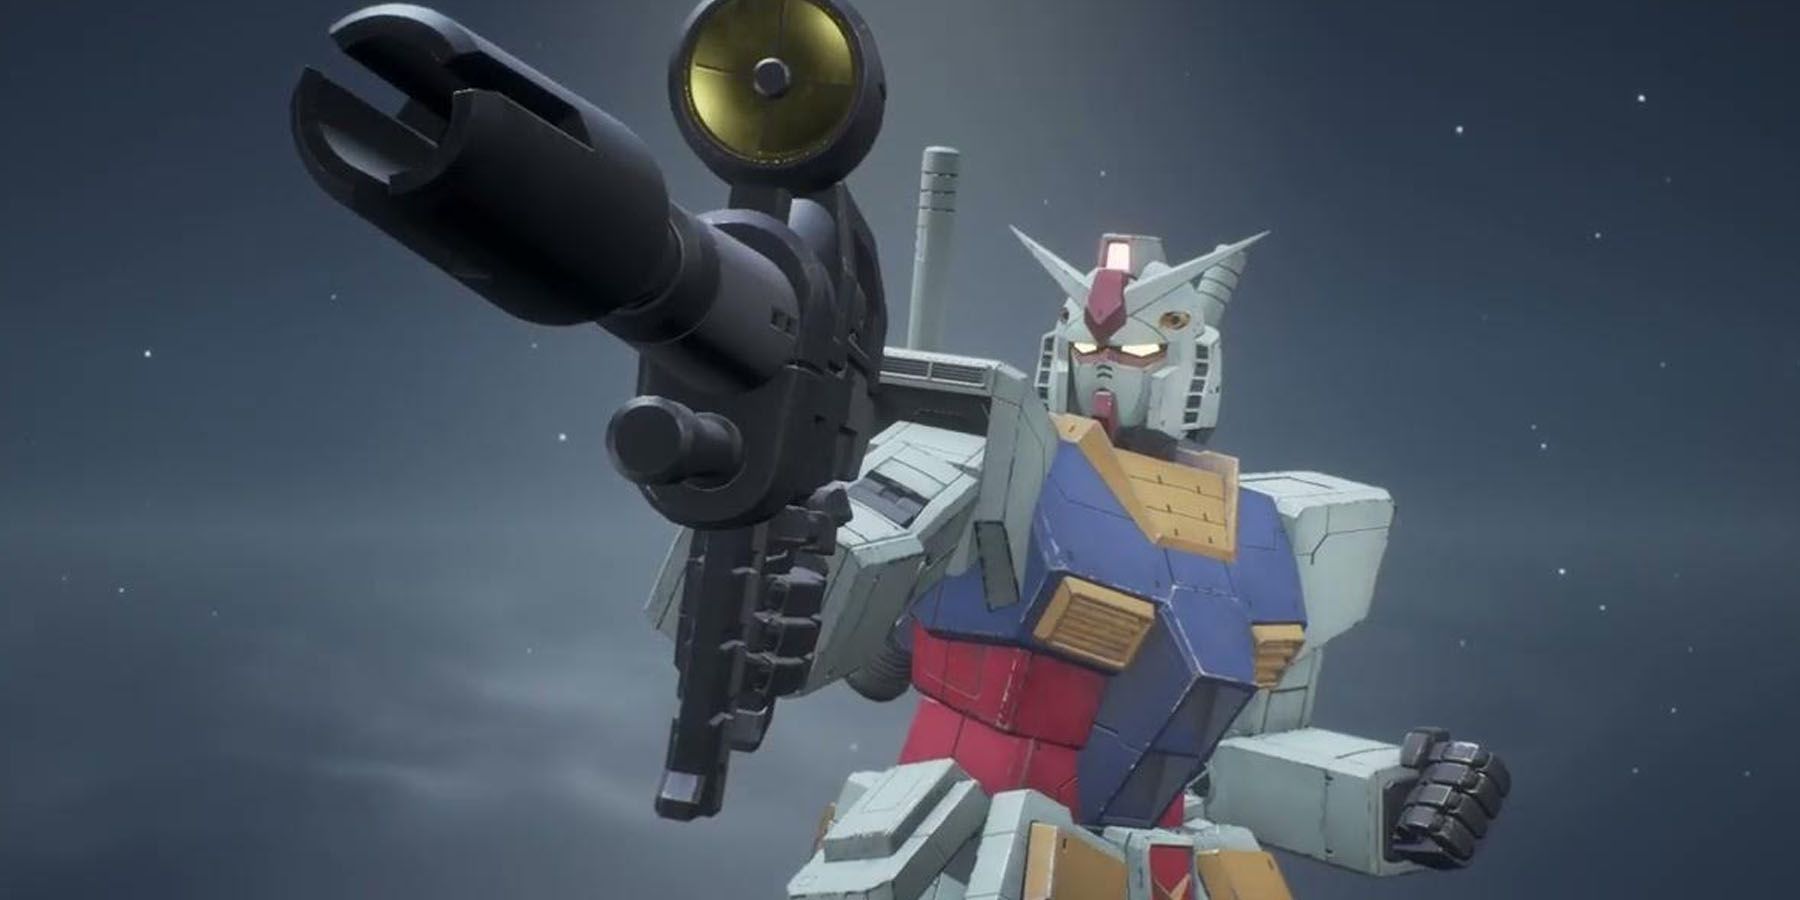 RX-78-2 Gundam with a blaster